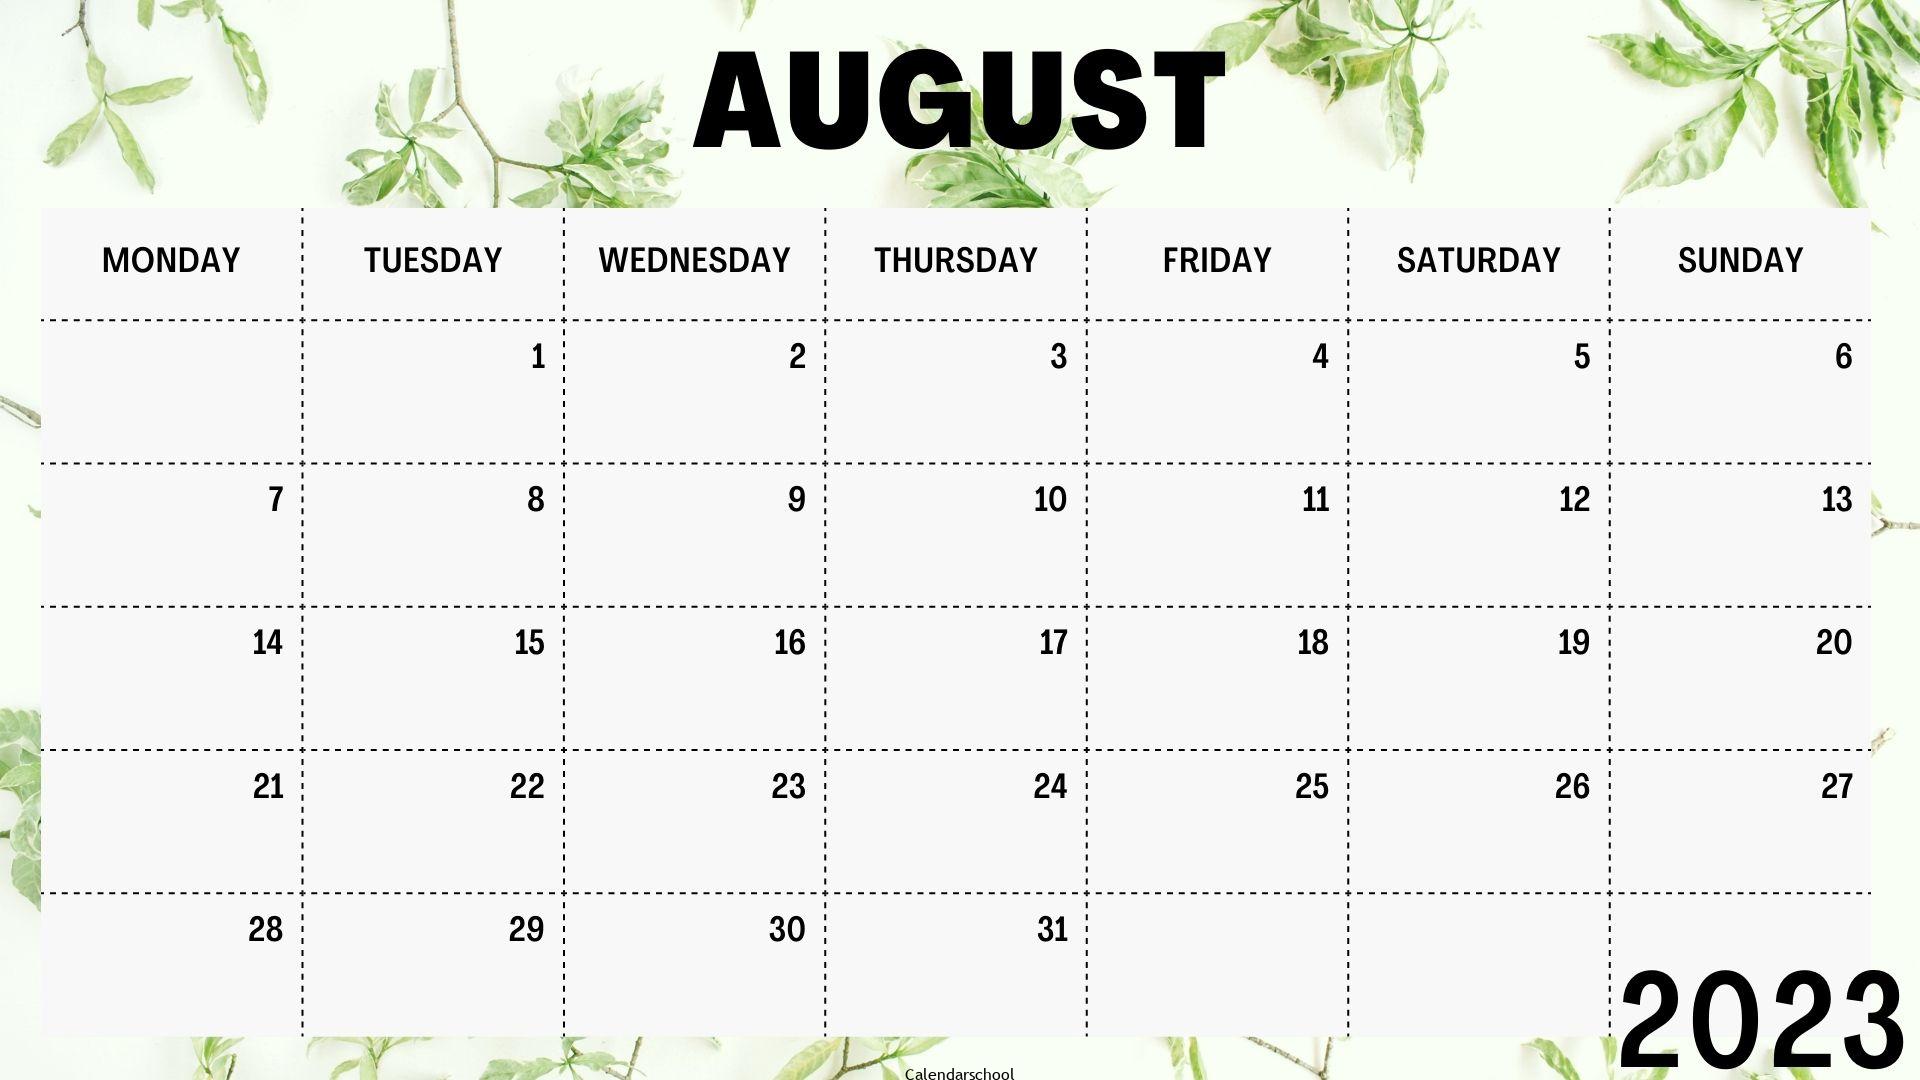 August Calendar 2023 With Festivals